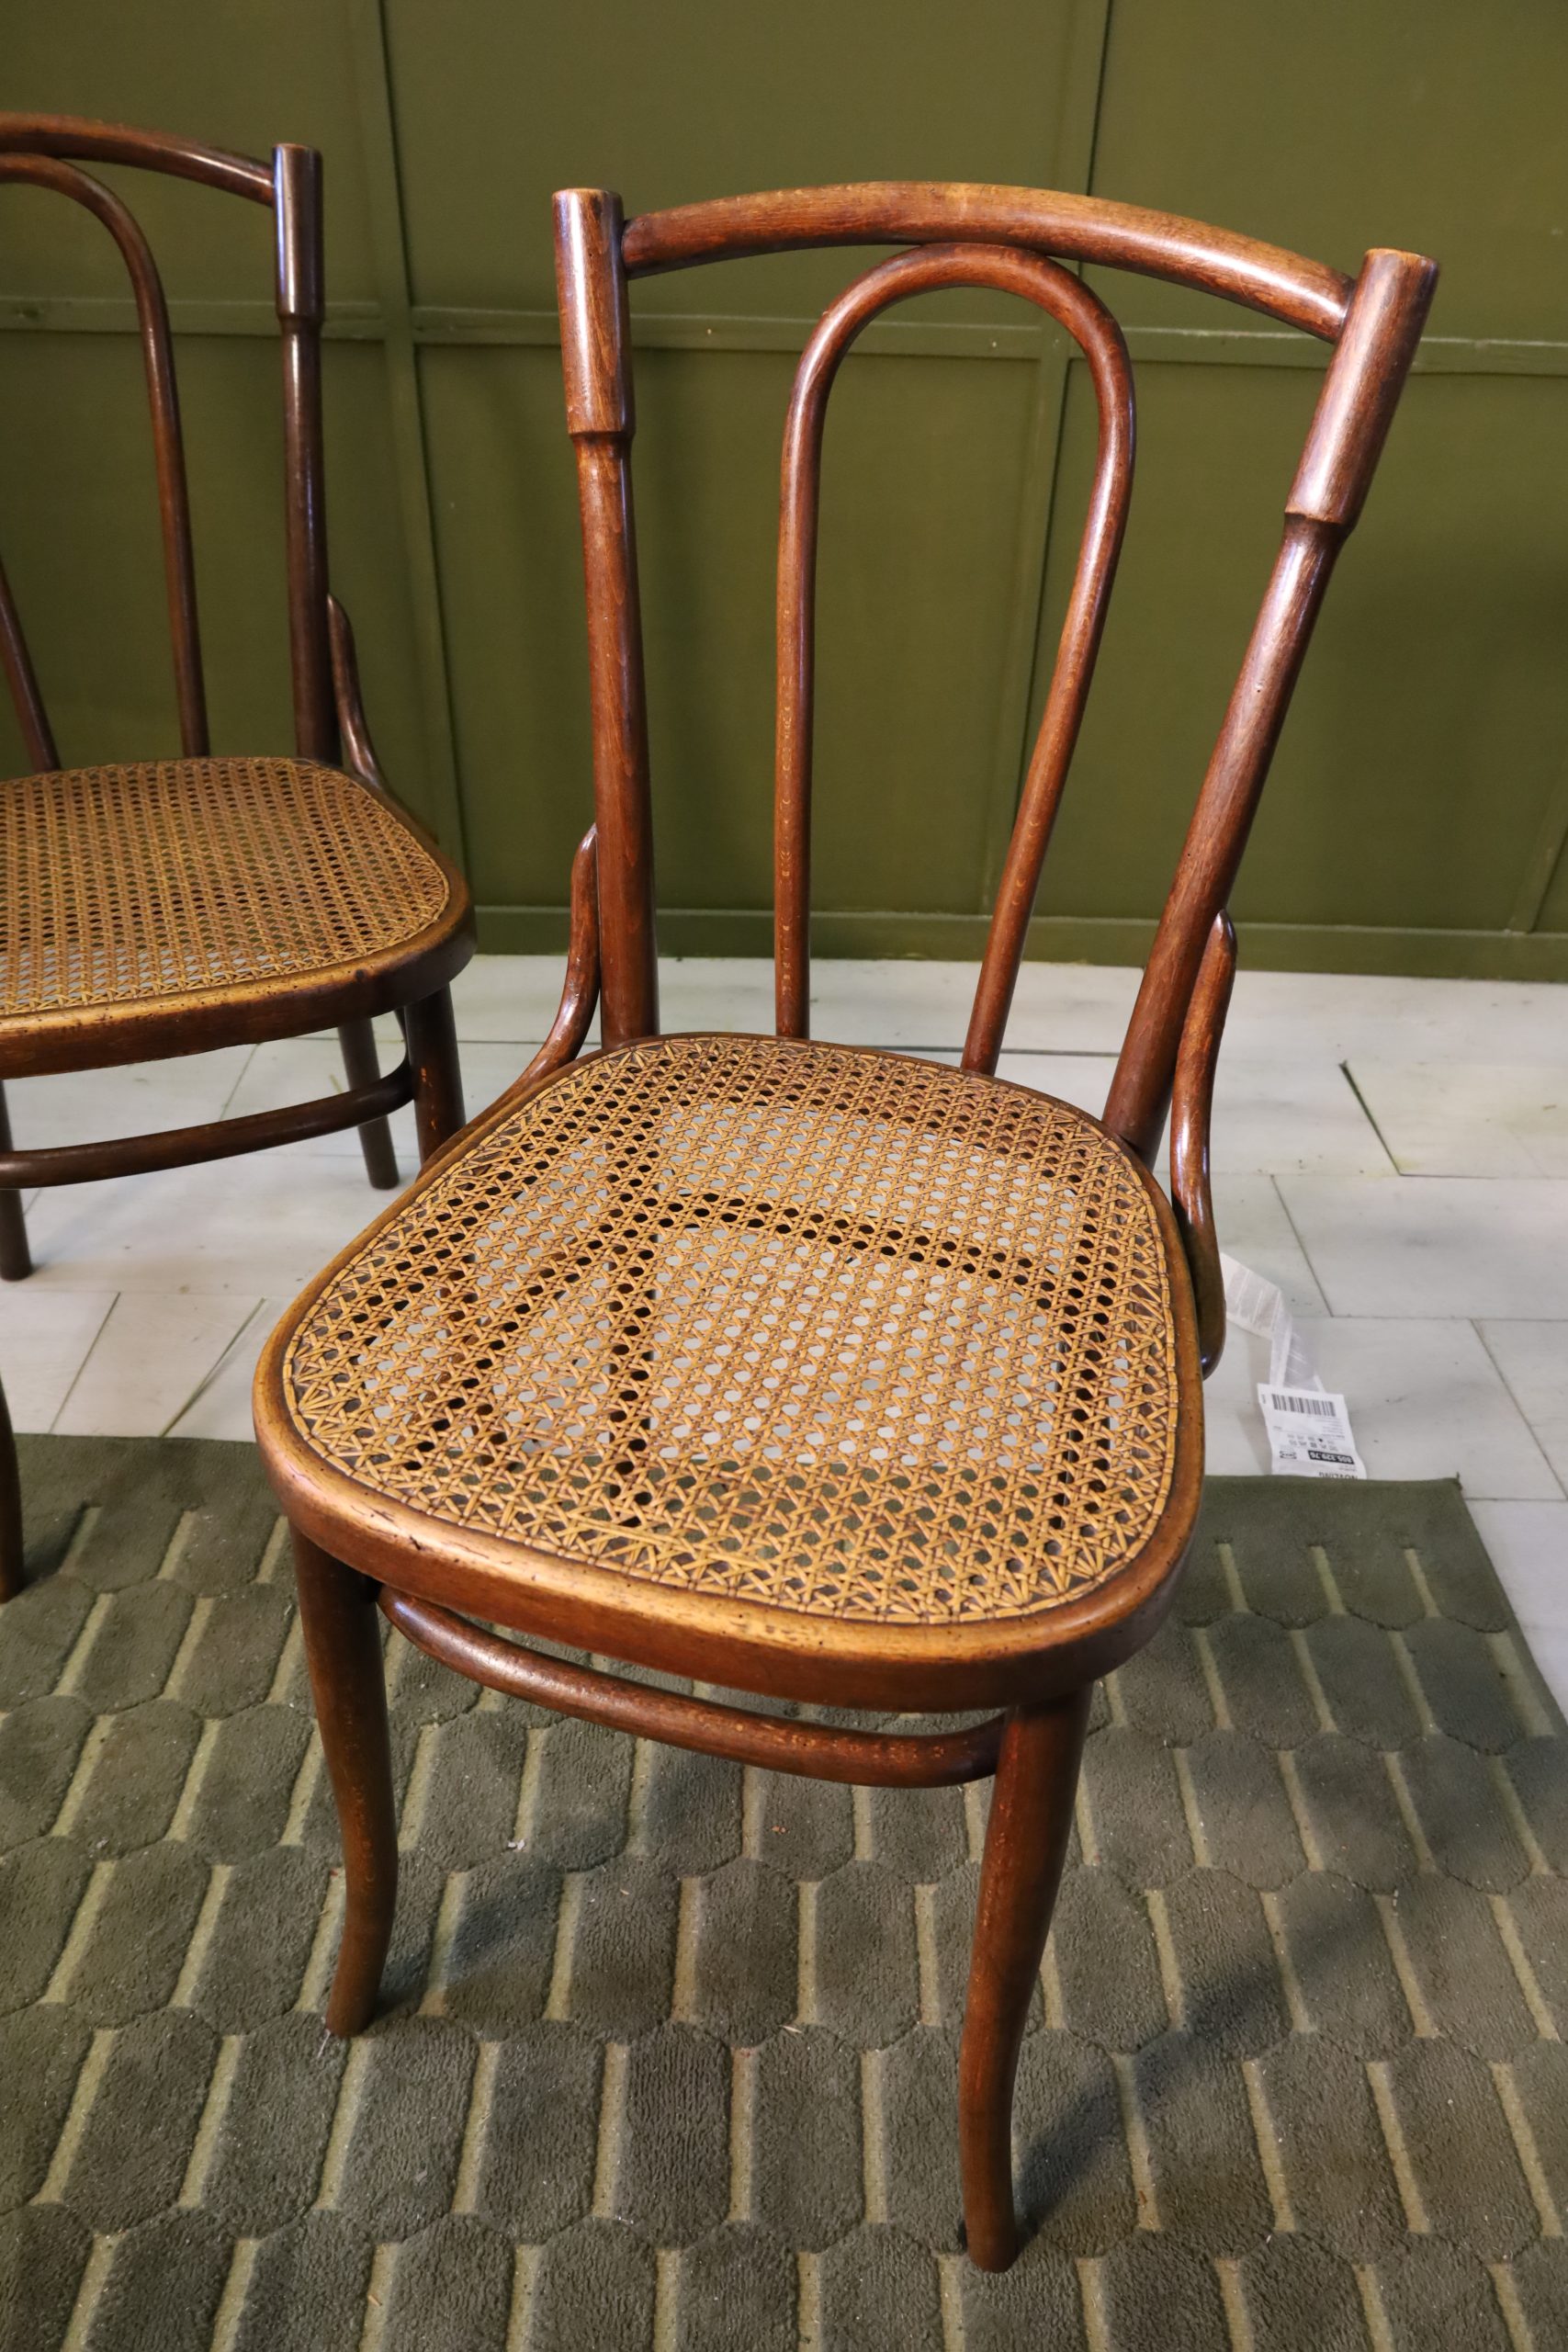 Dark chairs with wickerwork - 1/3 pc